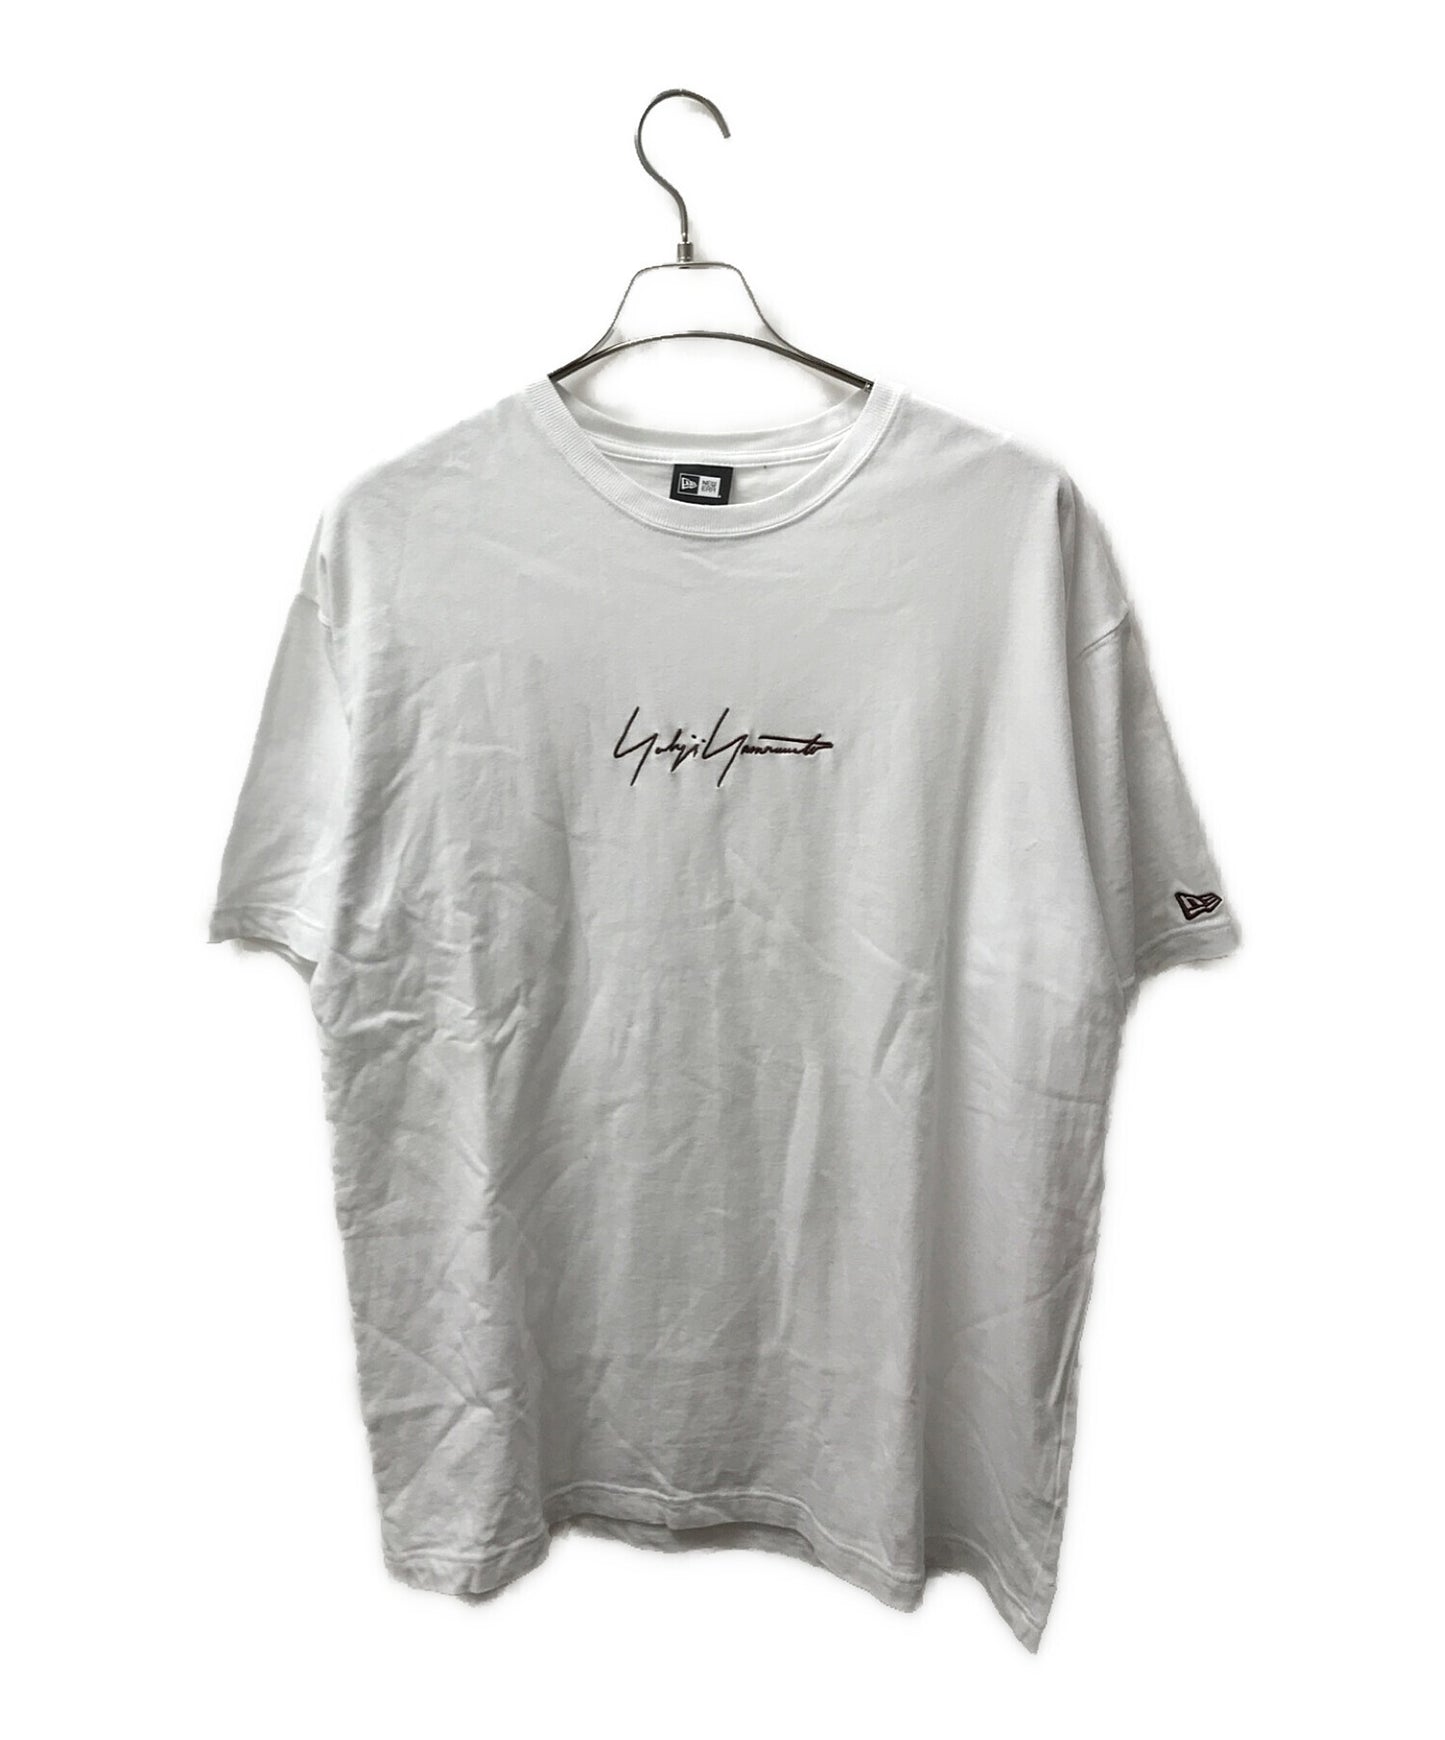 Yohji Yamamoto x New Era Collaboration T-shirts / Short Sleeve